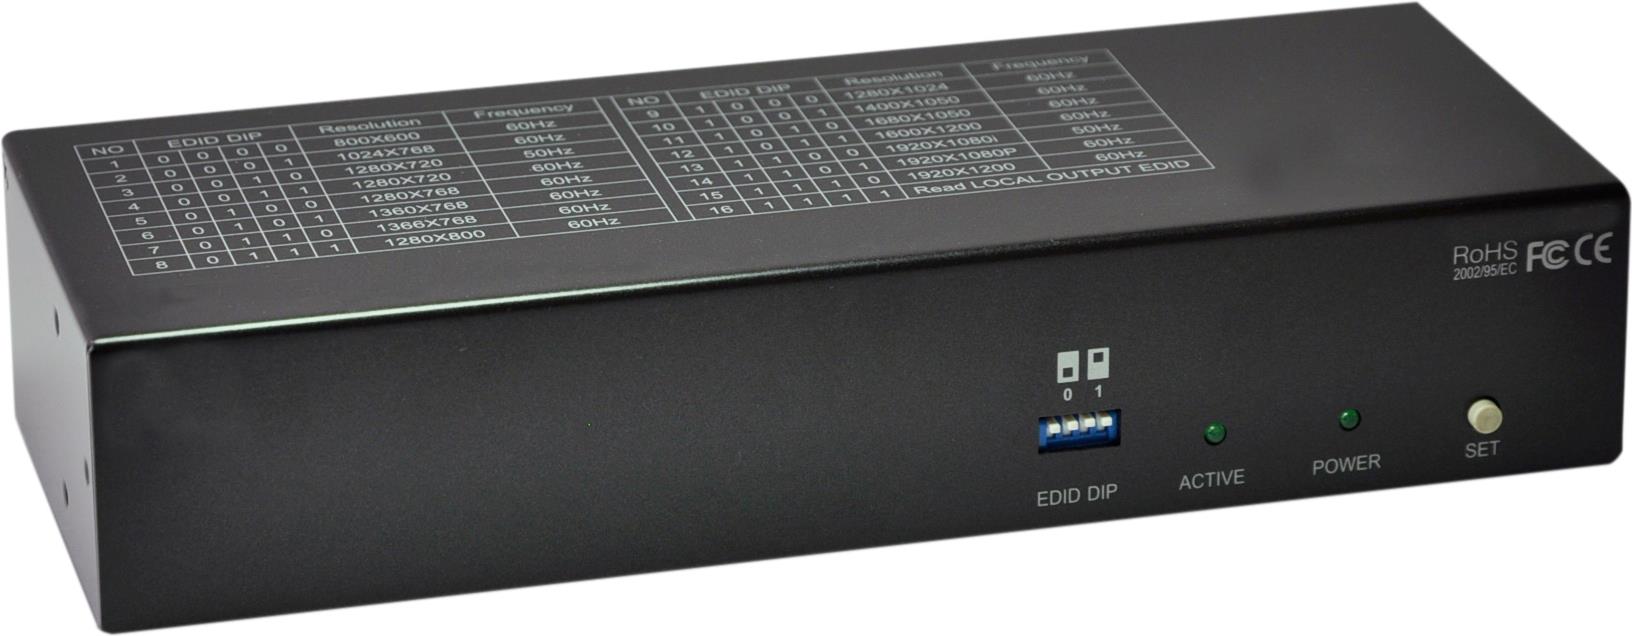 LevelOne HVE-9118T HDMI over Cat.5 Transmitter (HVE-9118T)